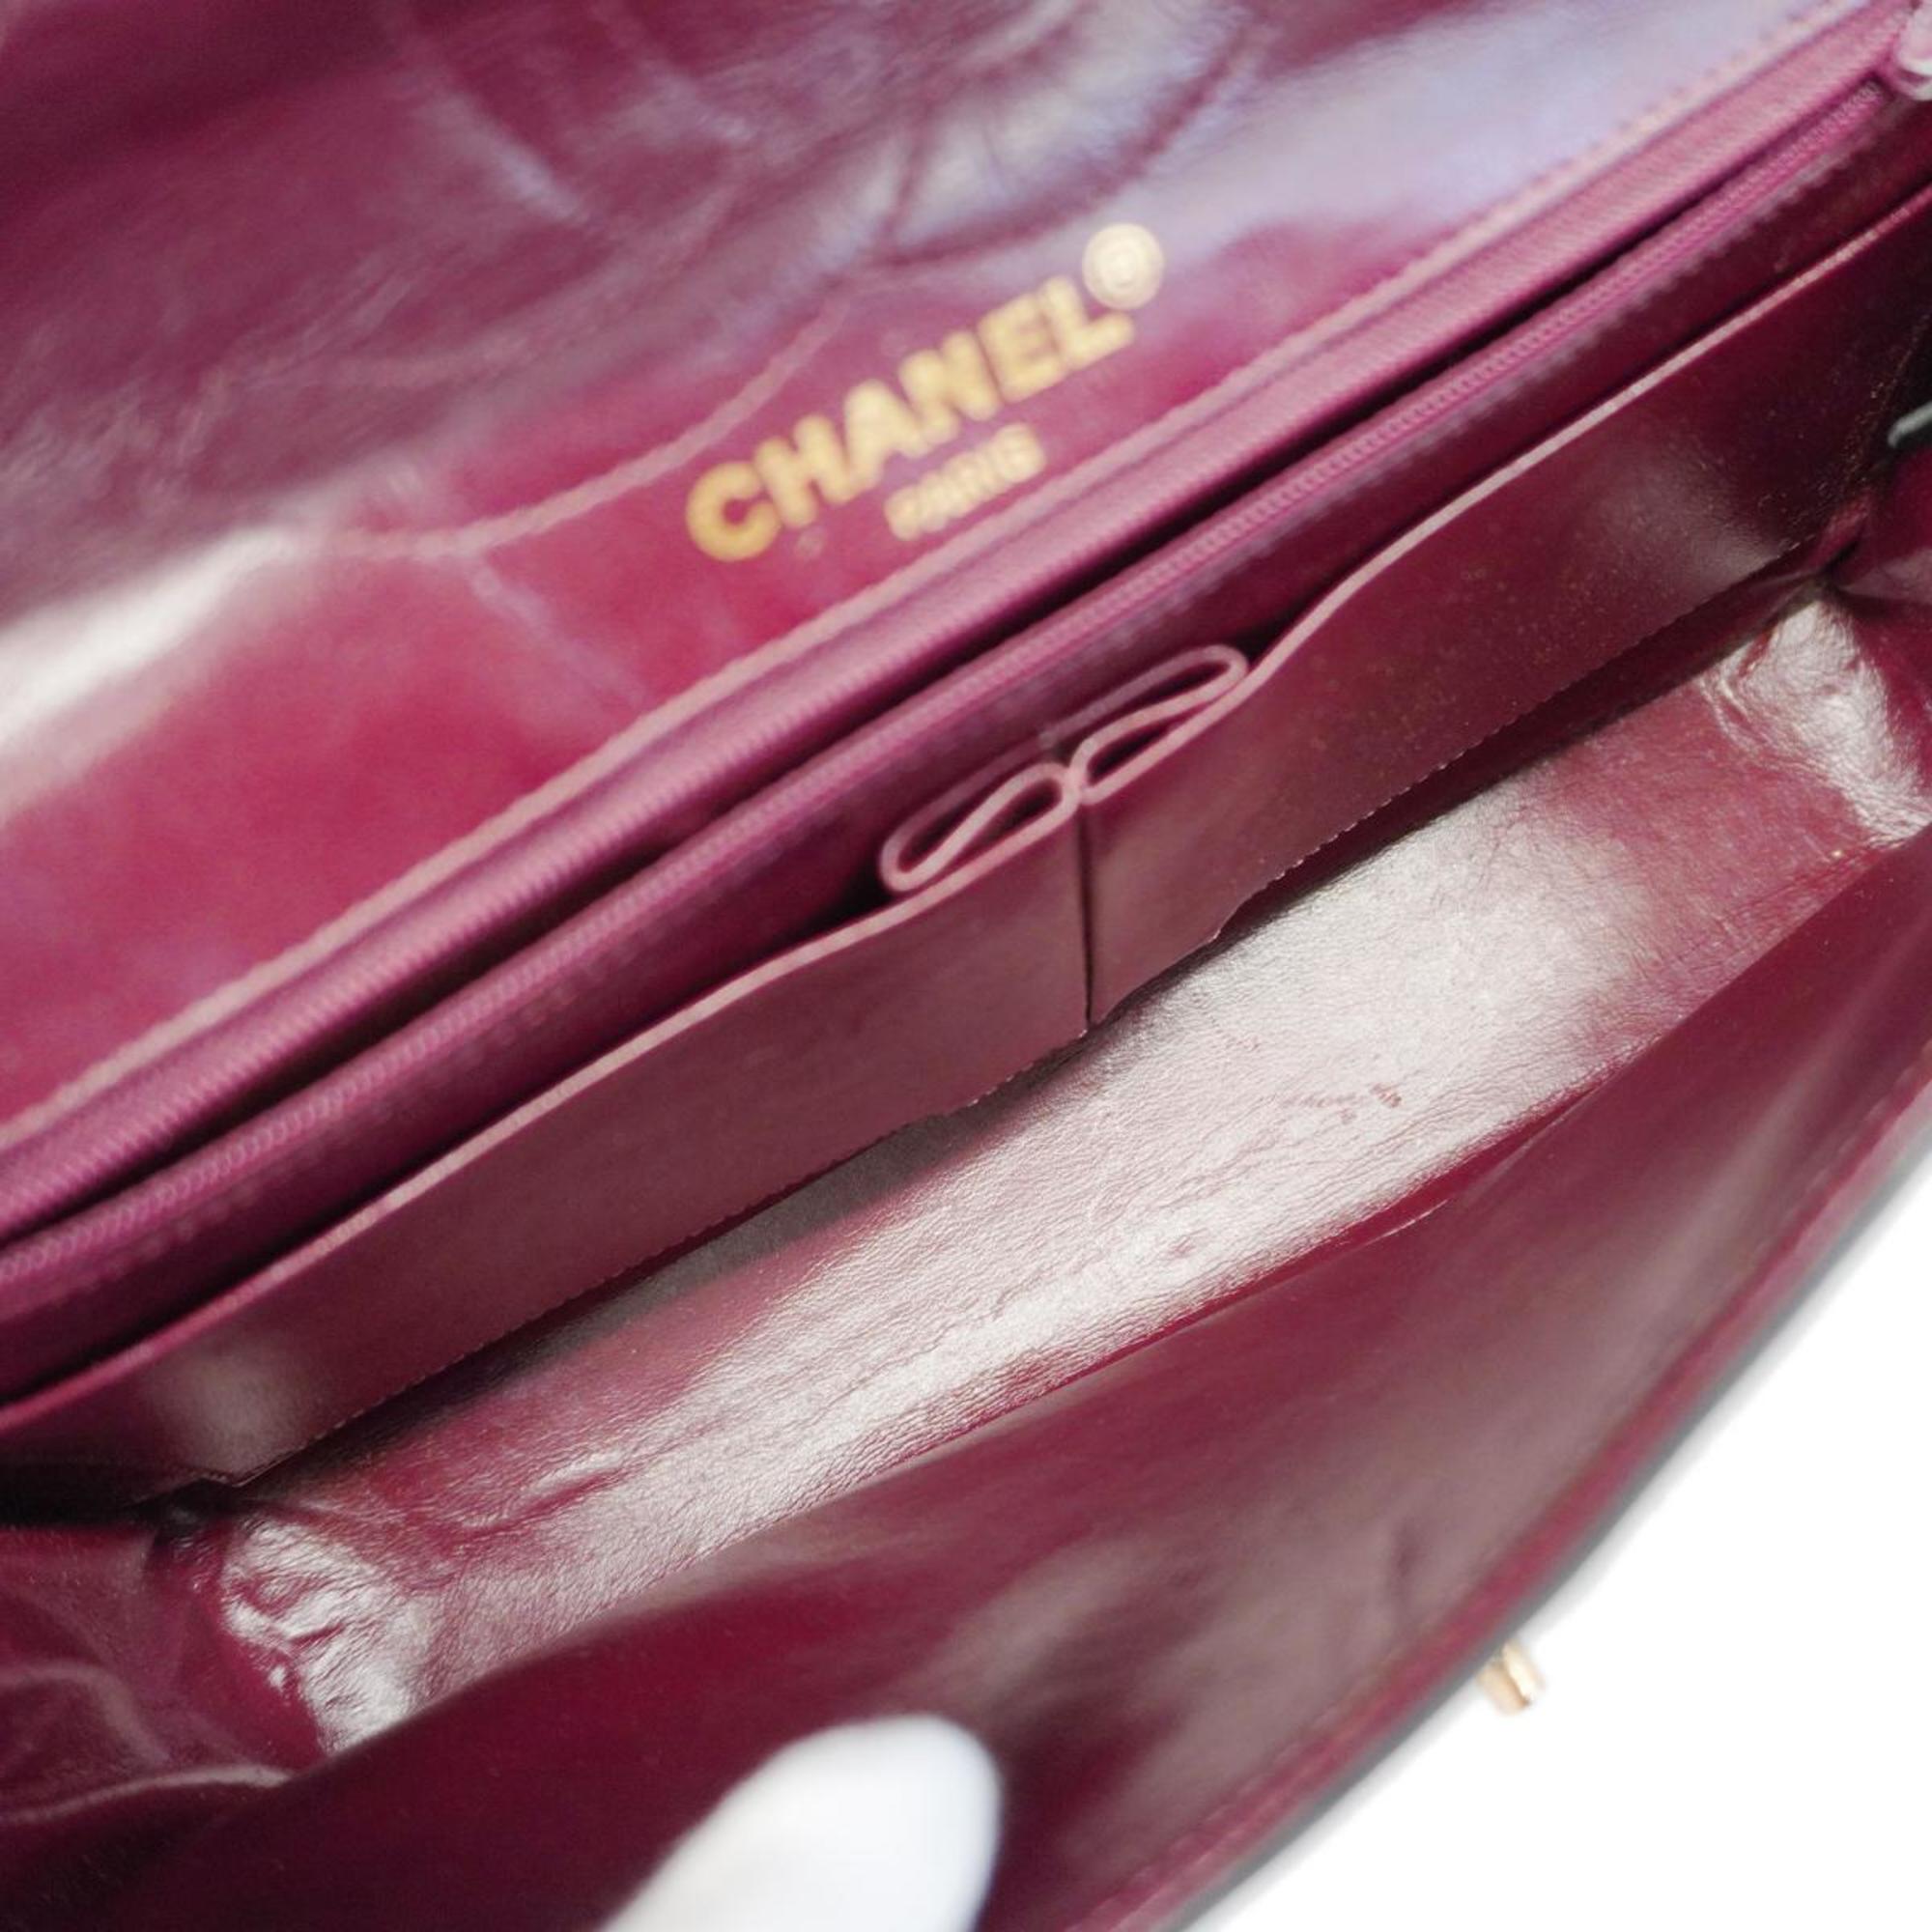 Chanel Shoulder Bag Matelasse Paris Limited W Flap Chain Lambskin Black Women's